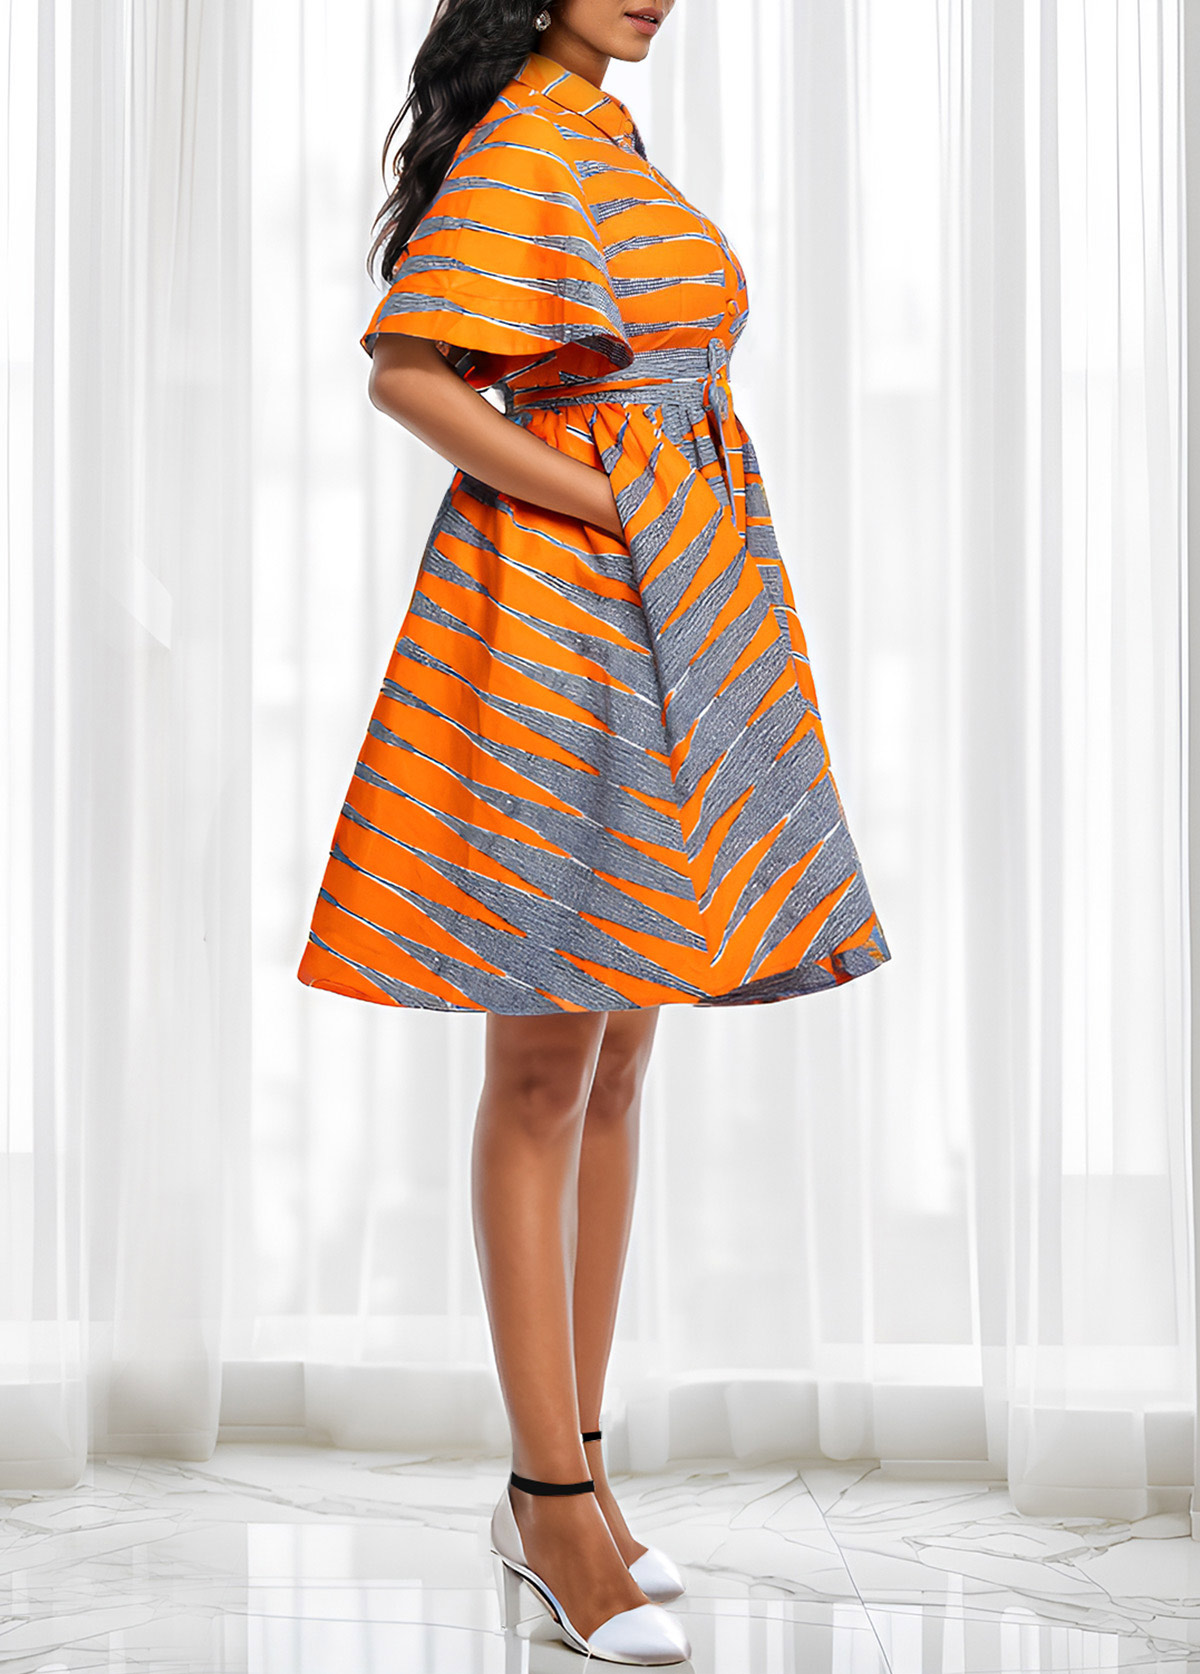 Tribal Print Button Belted Orange Short Sleeve Dress